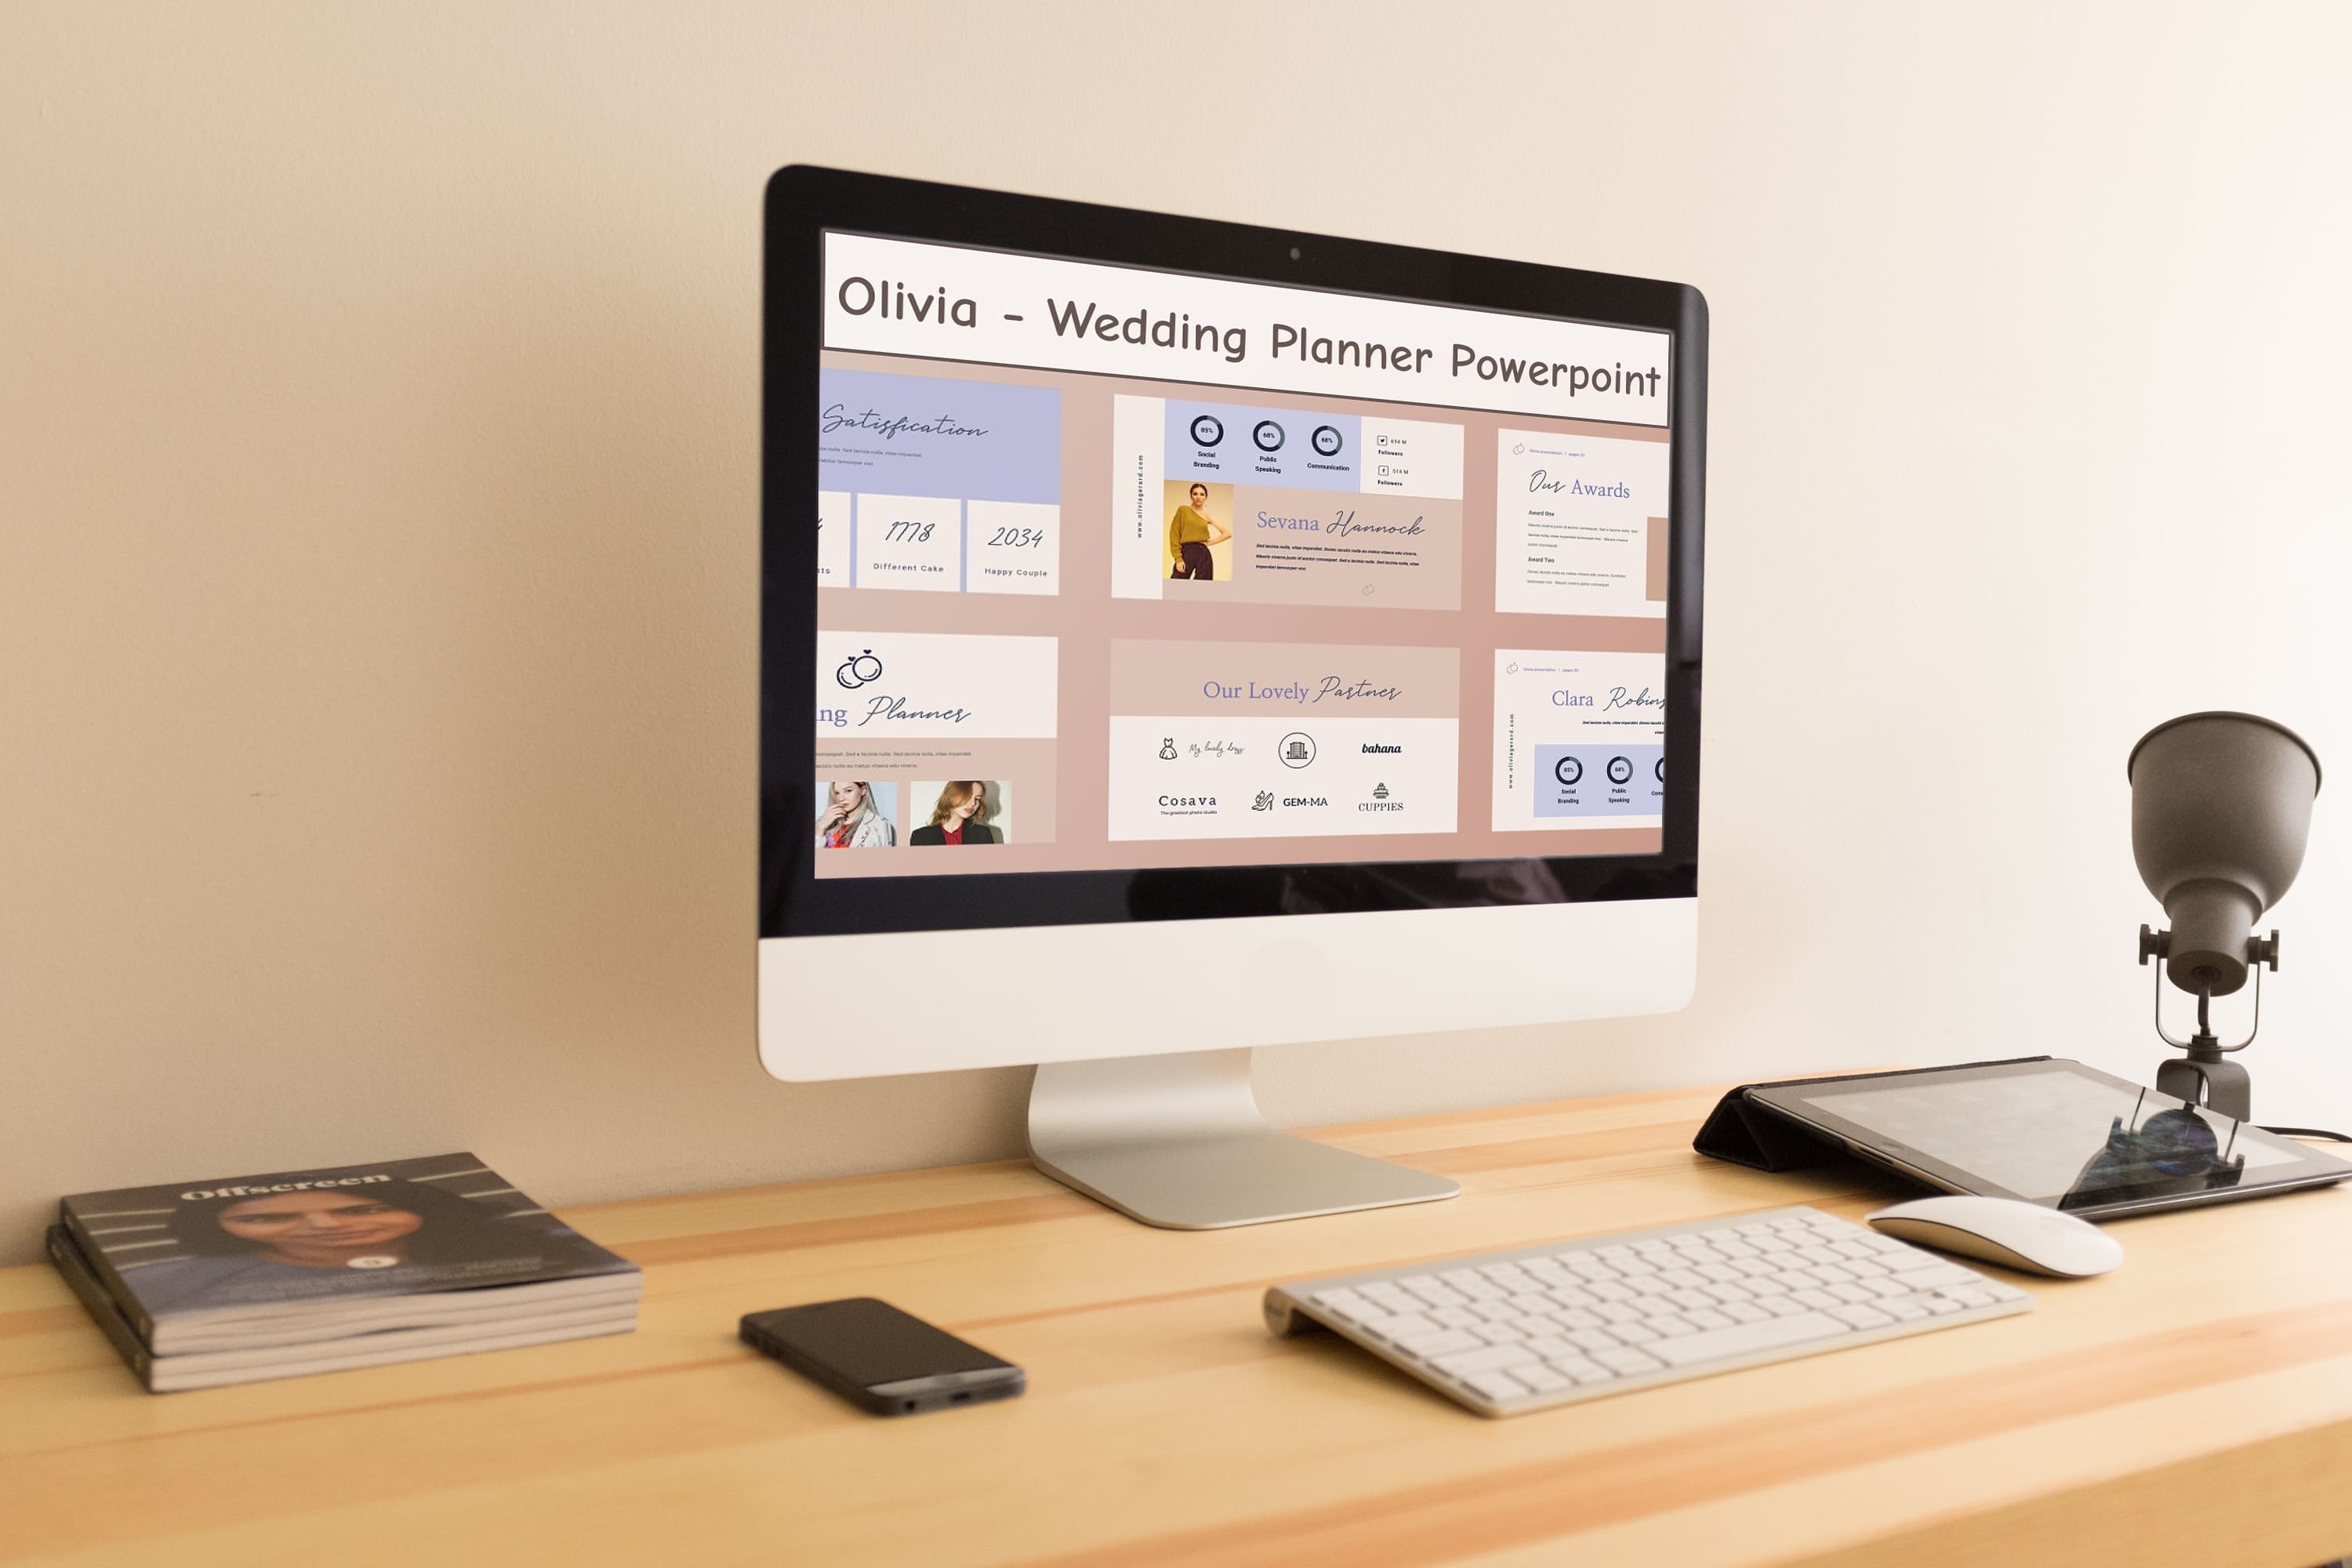 Olivia - Wedding Planner Powerpoint - desktop.